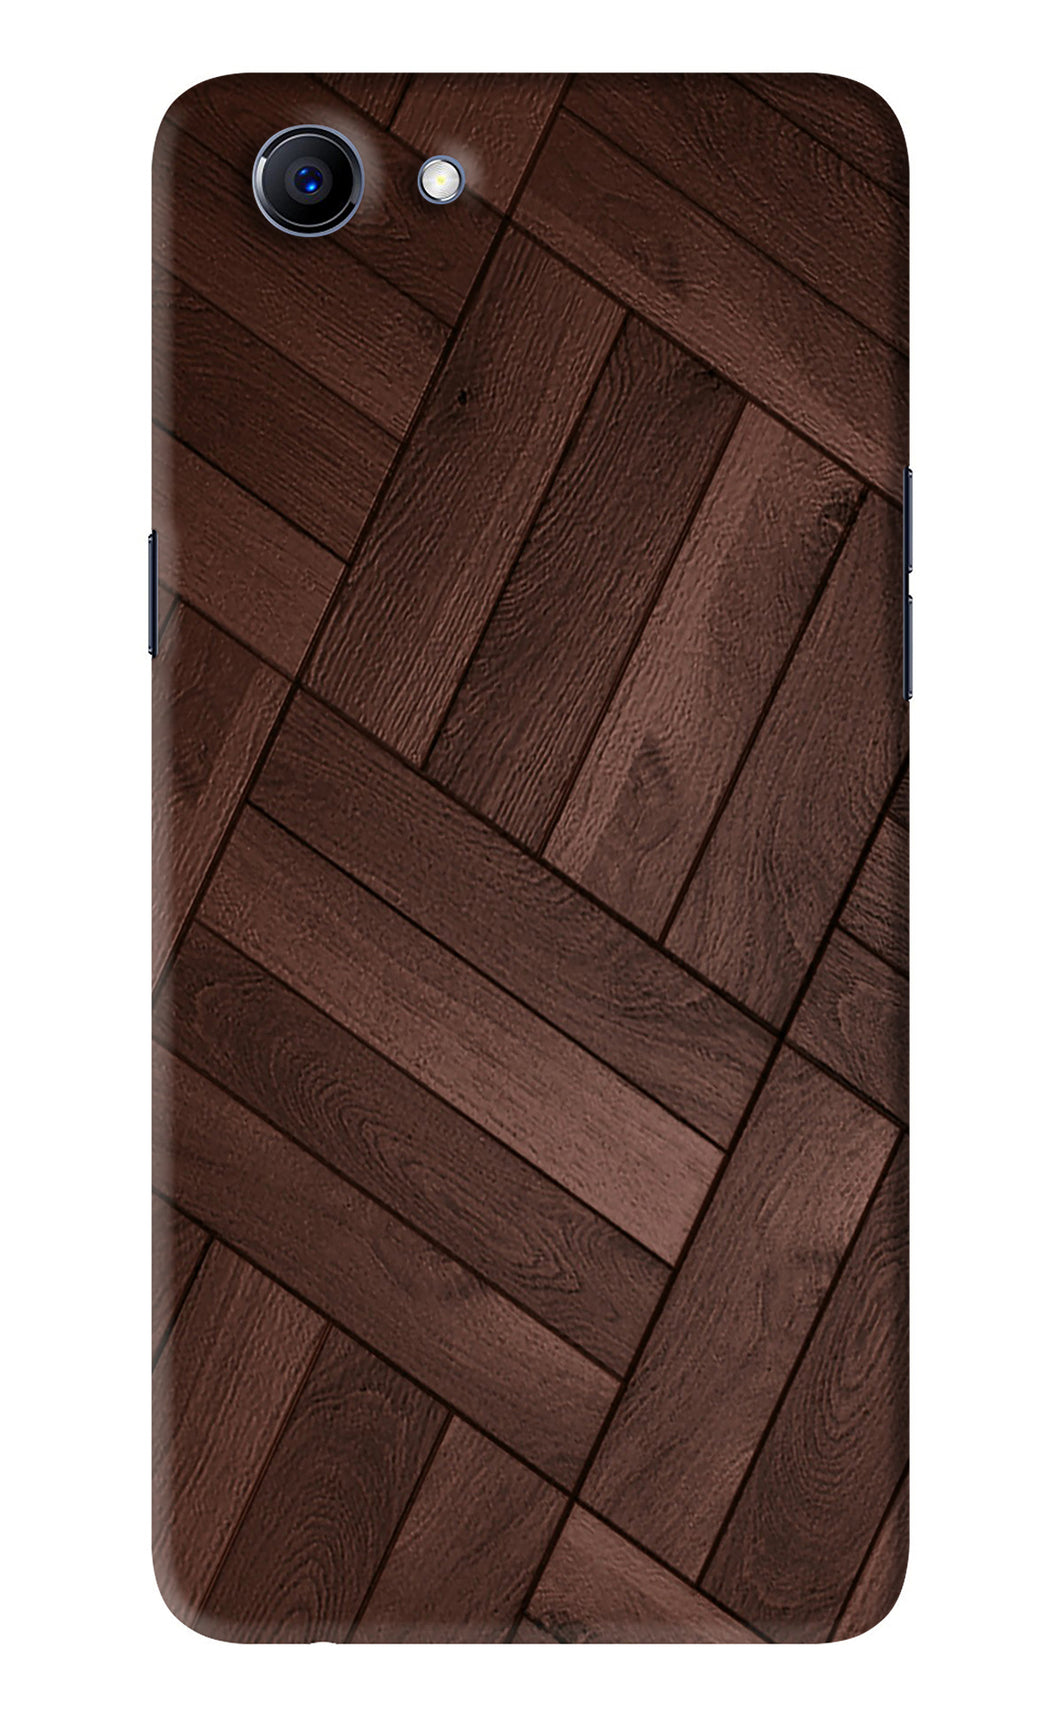 Wooden Texture Design Realme 1 Back Skin Wrap